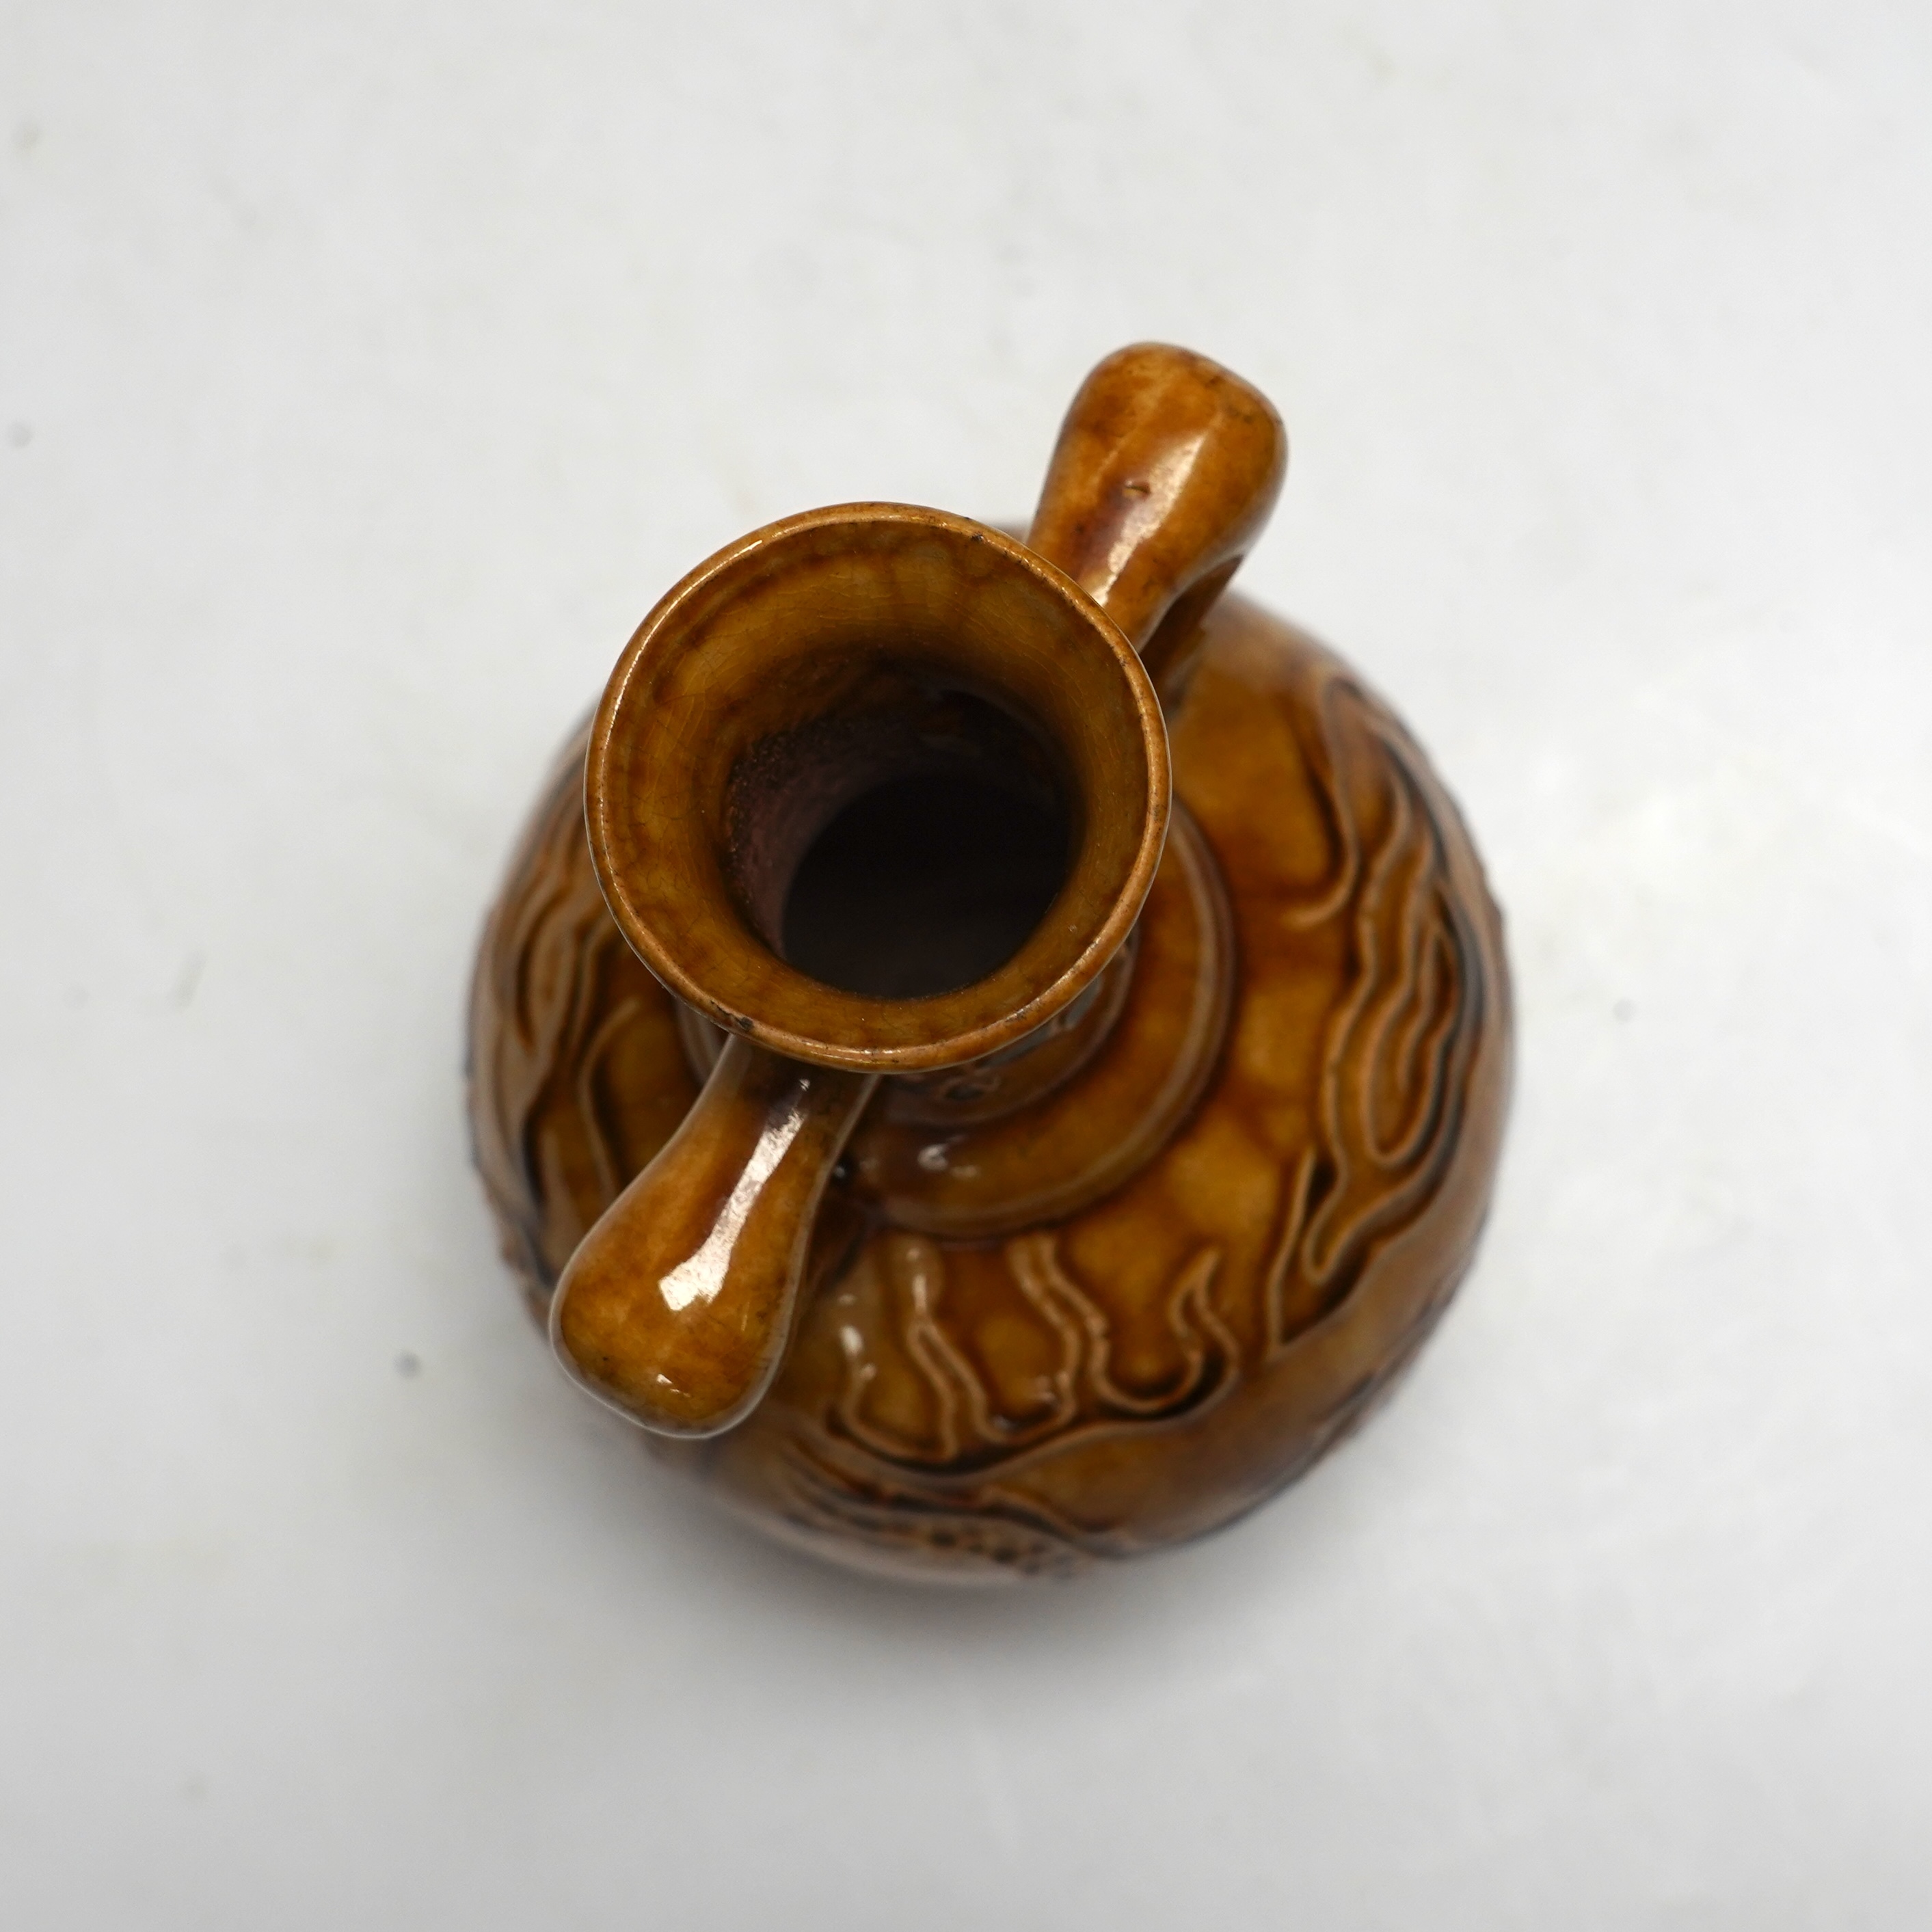 An 18th century style Chinese ochre glazed vase, 22.5cm